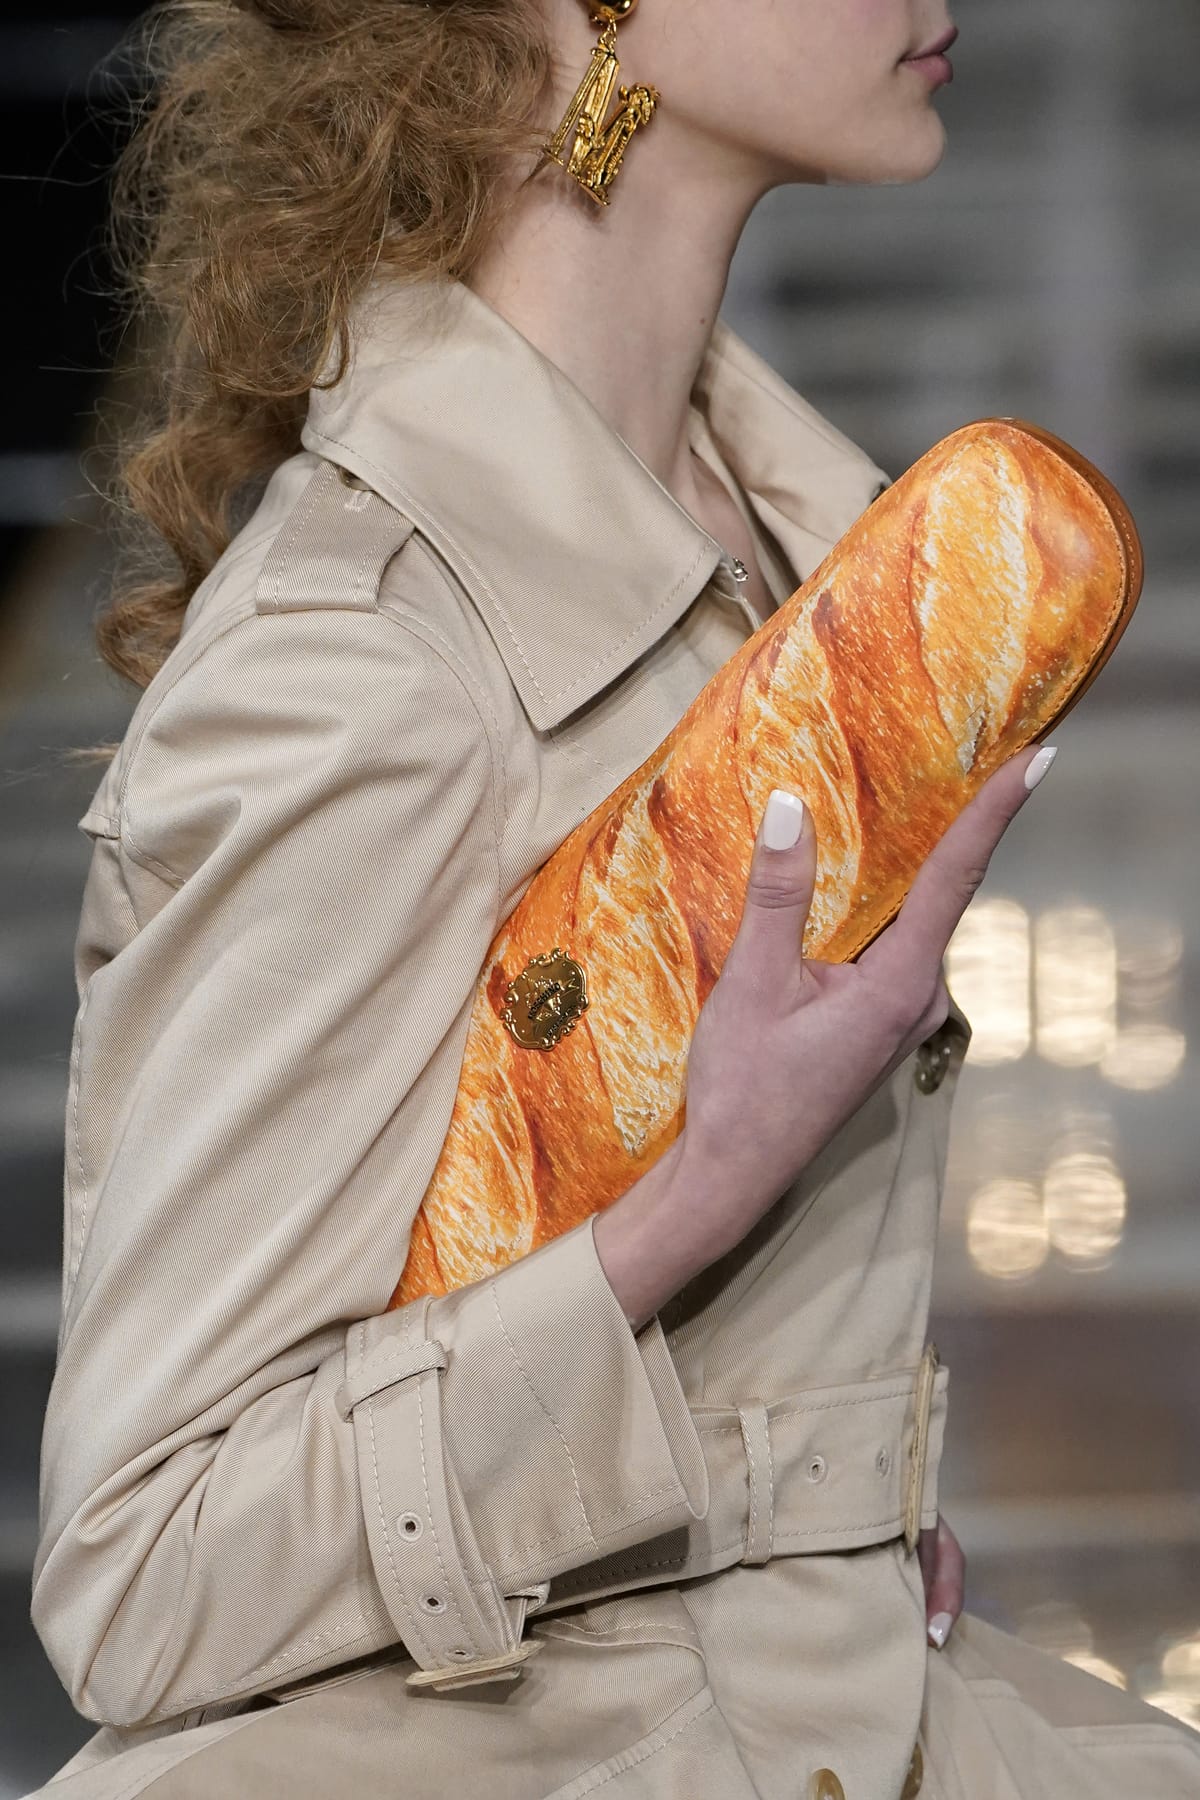 Panera Bread launches 'The Baguette' handbag